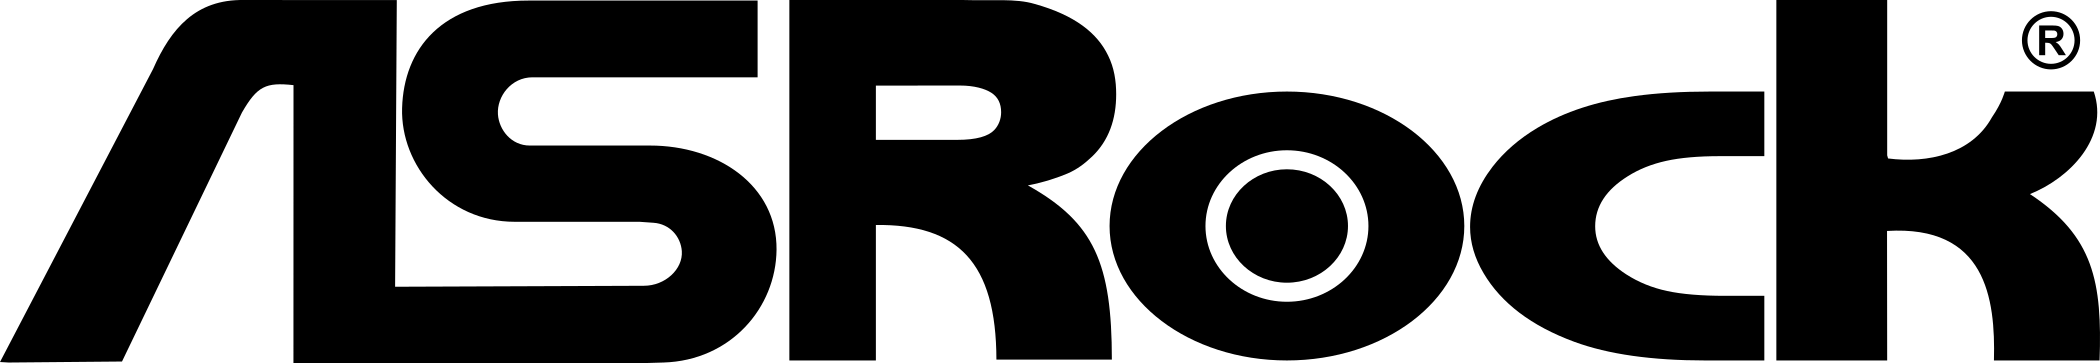 asrock logo.